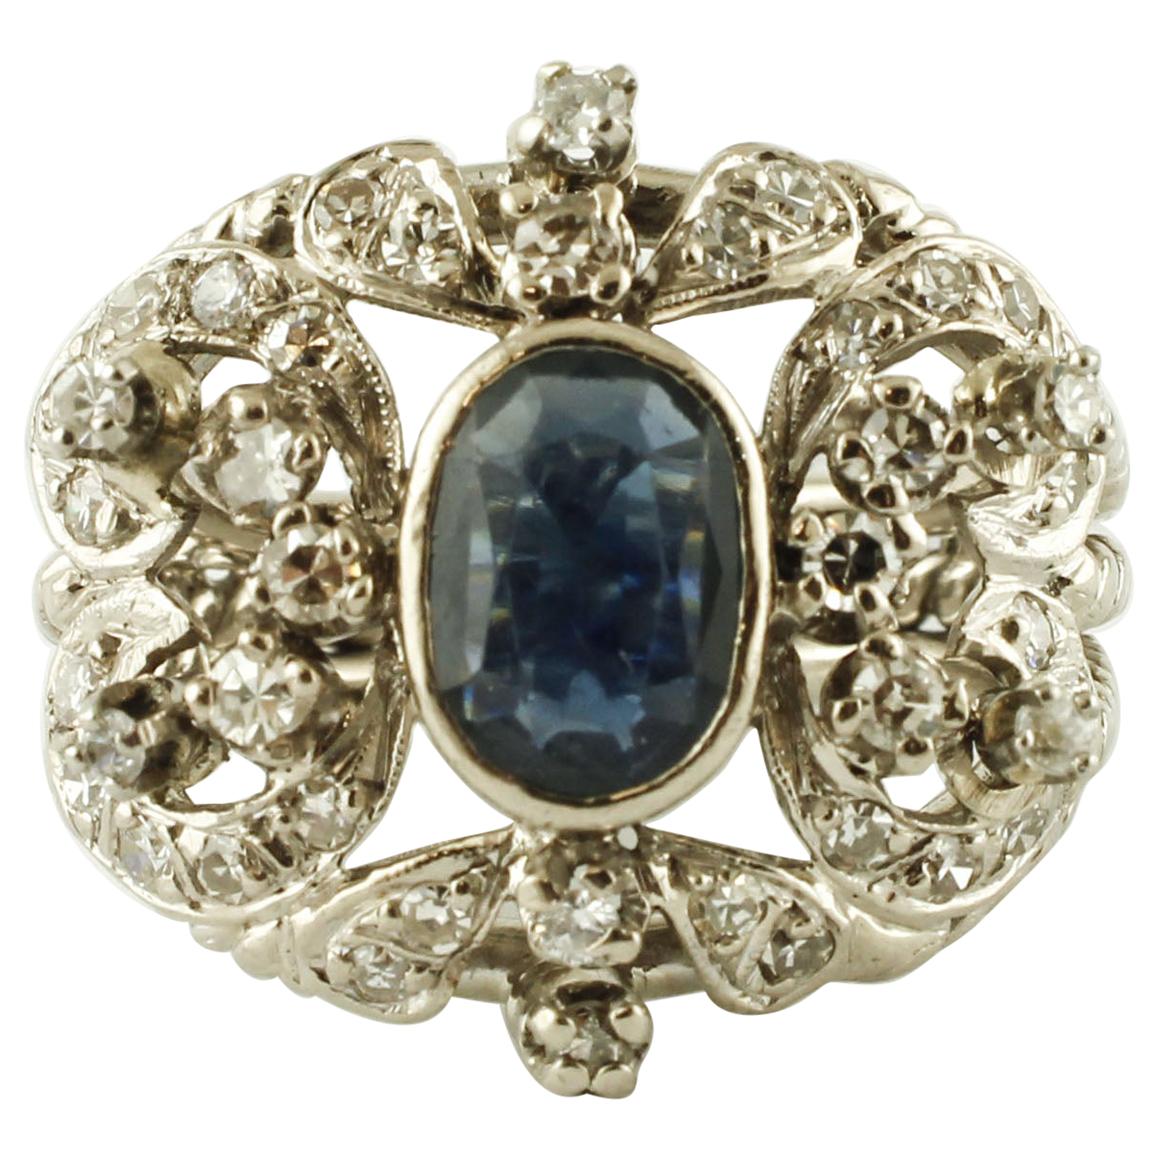 Central Blue Sapphire, Diamonds, 12 Karat White Gold Vintage Ring